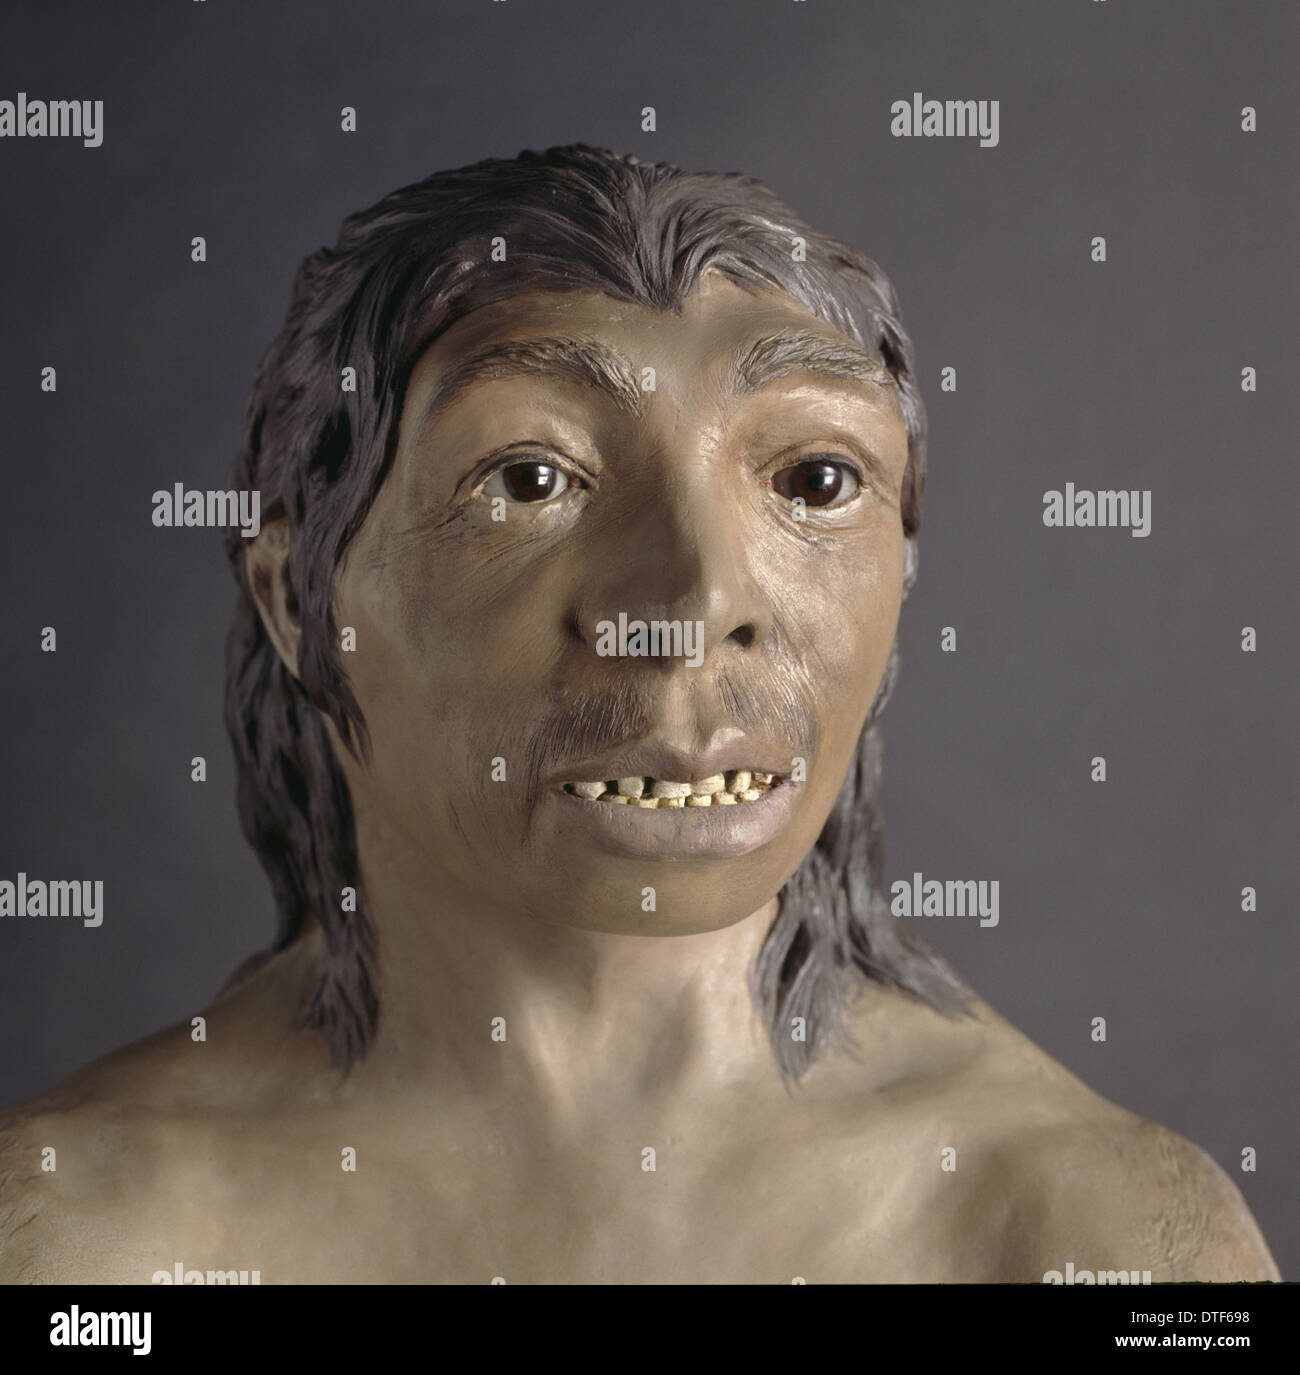 homo-neanderthalensis-neanderthal-woman-tabun-c1-dtf698.jpg